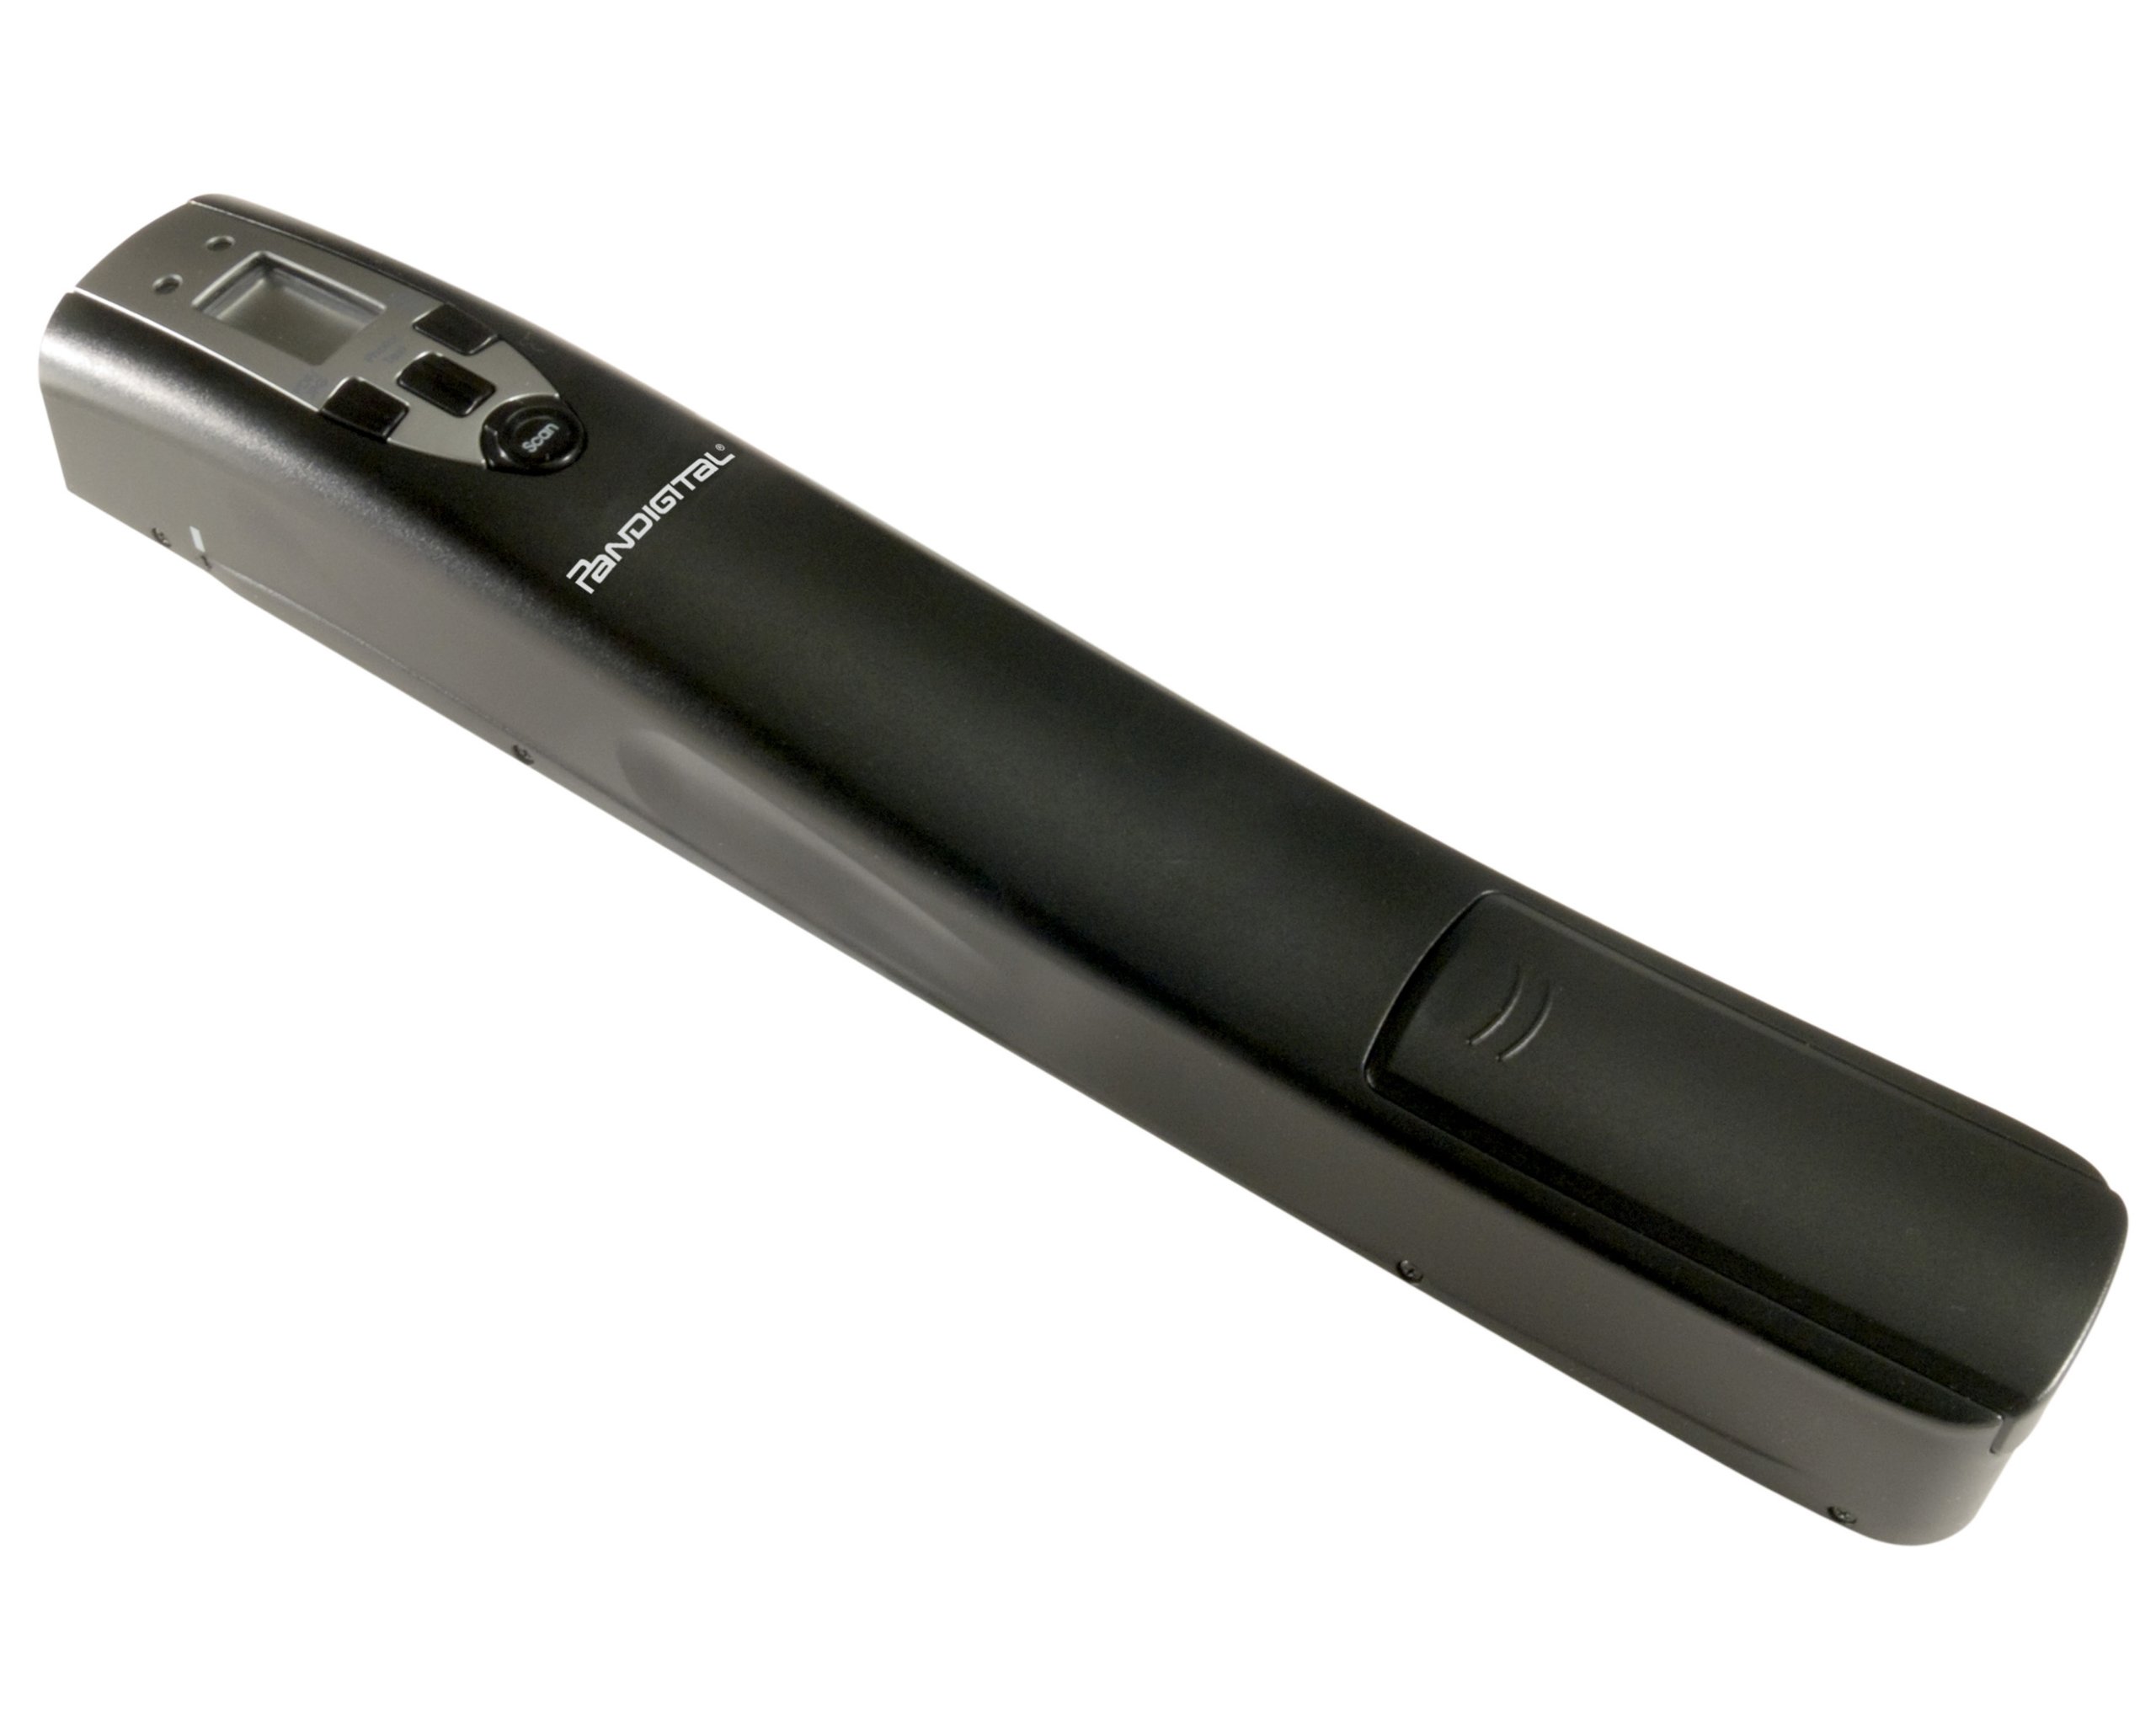 Pandigital panscn handheld wand scanner office products